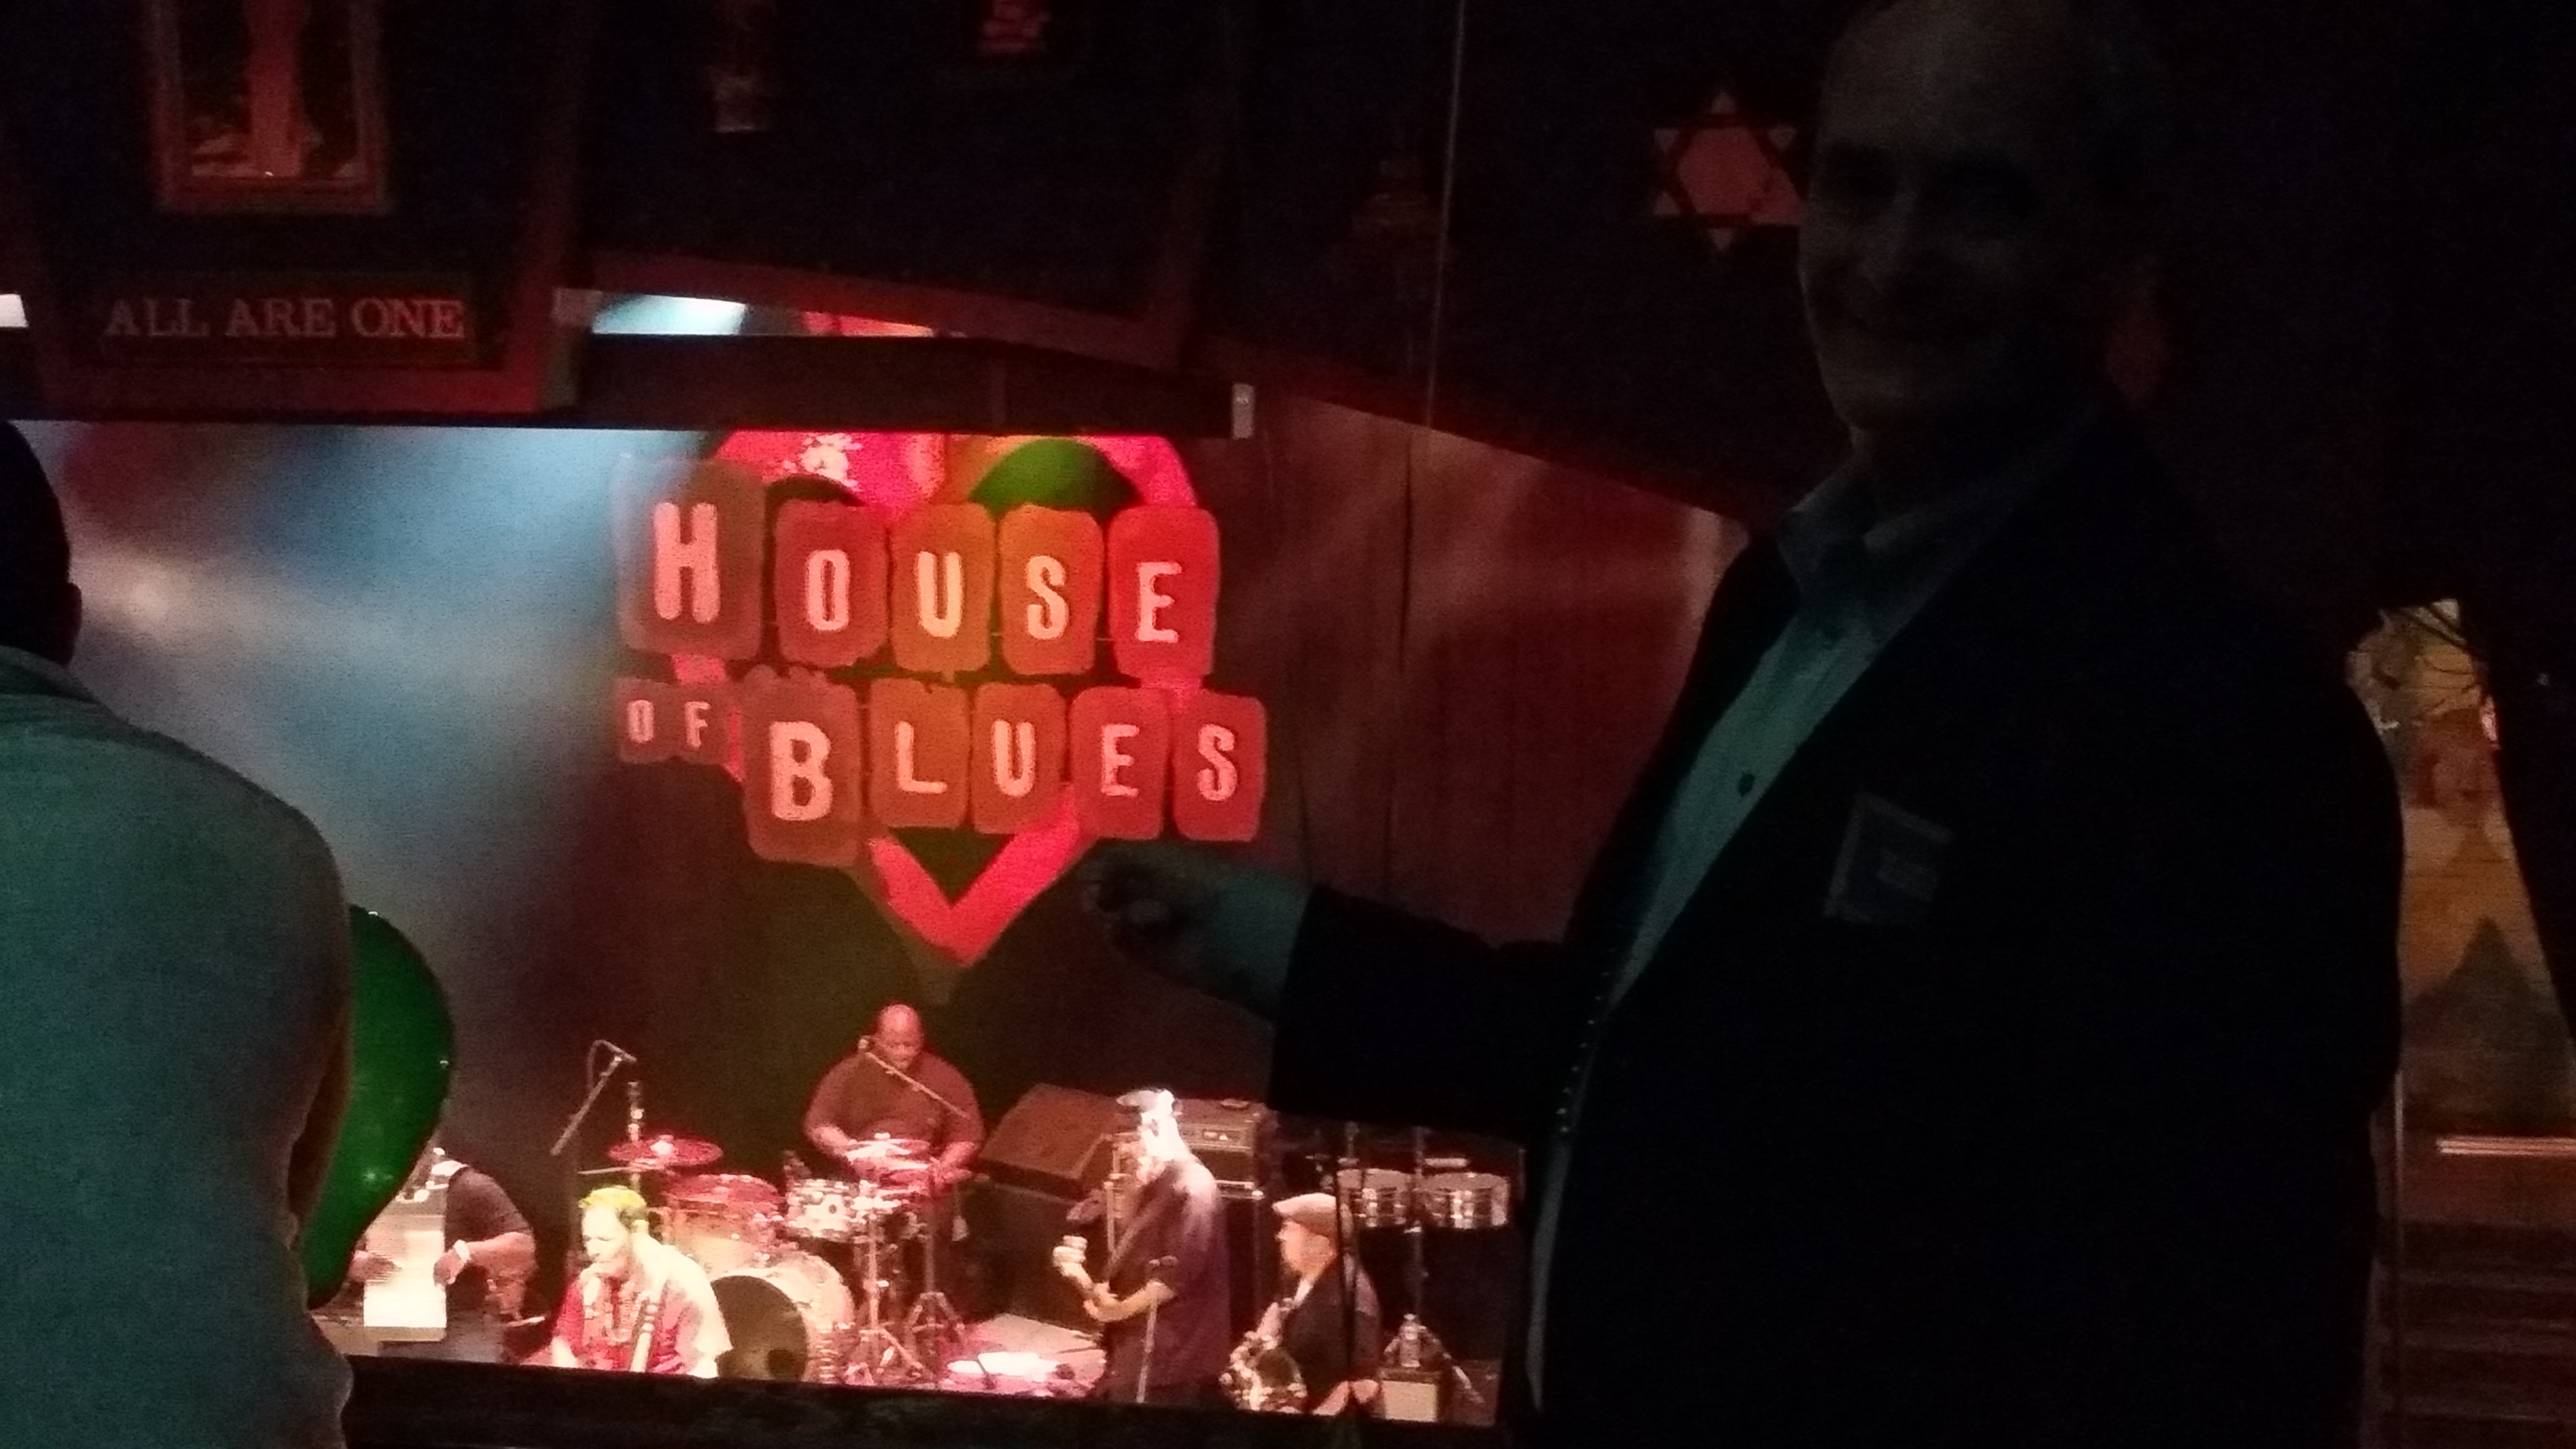 Jeff Fishman at Chris Mulkey's House of Blues Mardi Gras Performance.